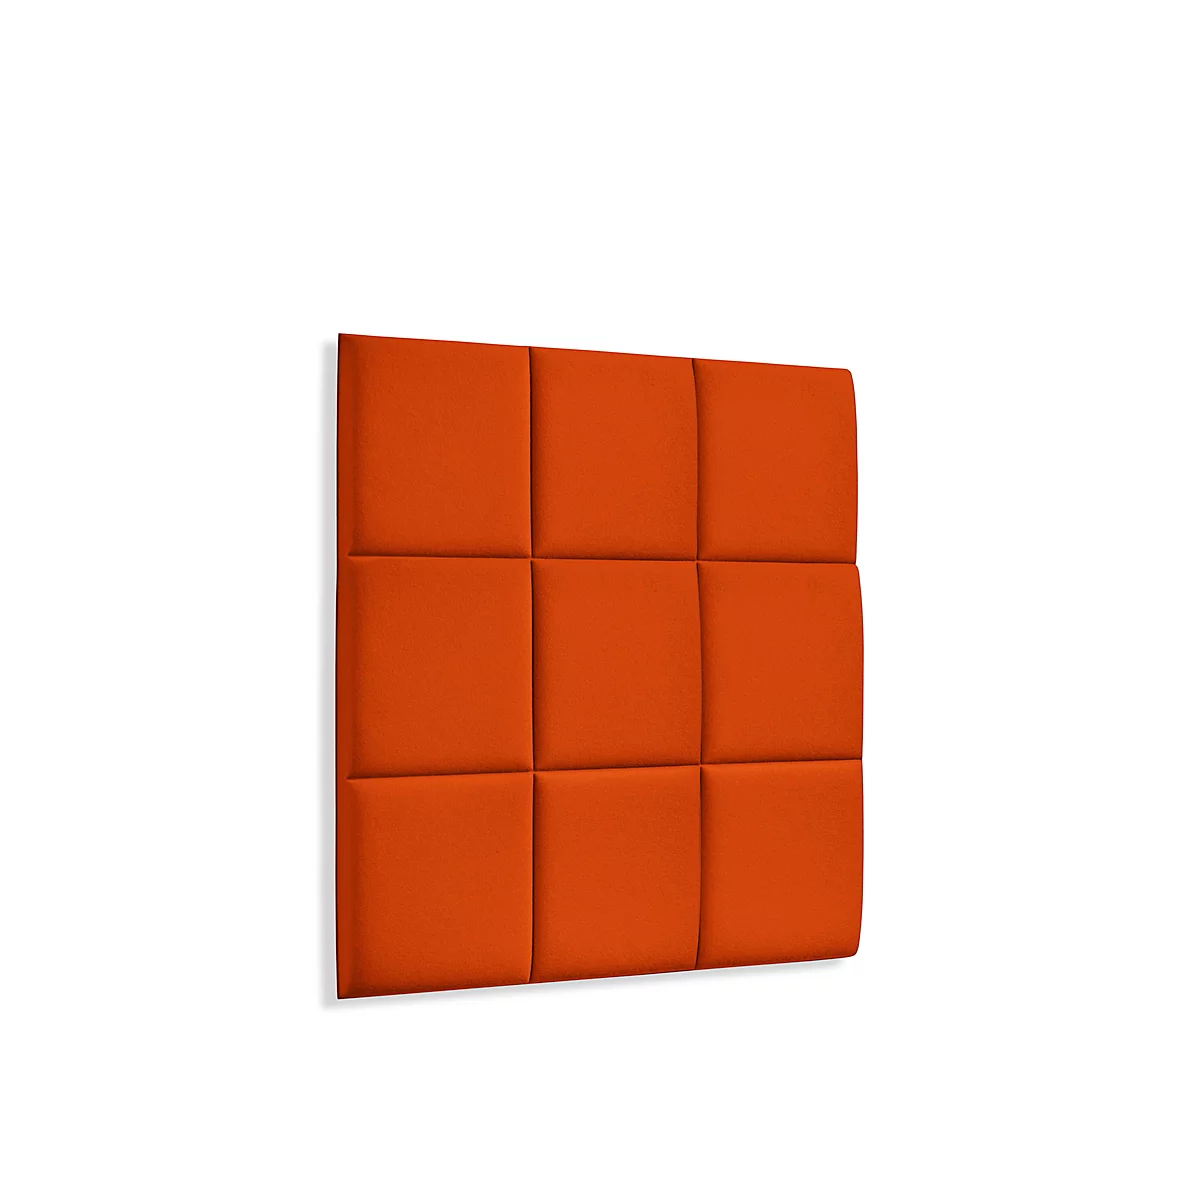 Wandpaneele m. Magnetbefestigung, B 604 x T 604 x H 47 mm, versch. 9 Square-Design, orange